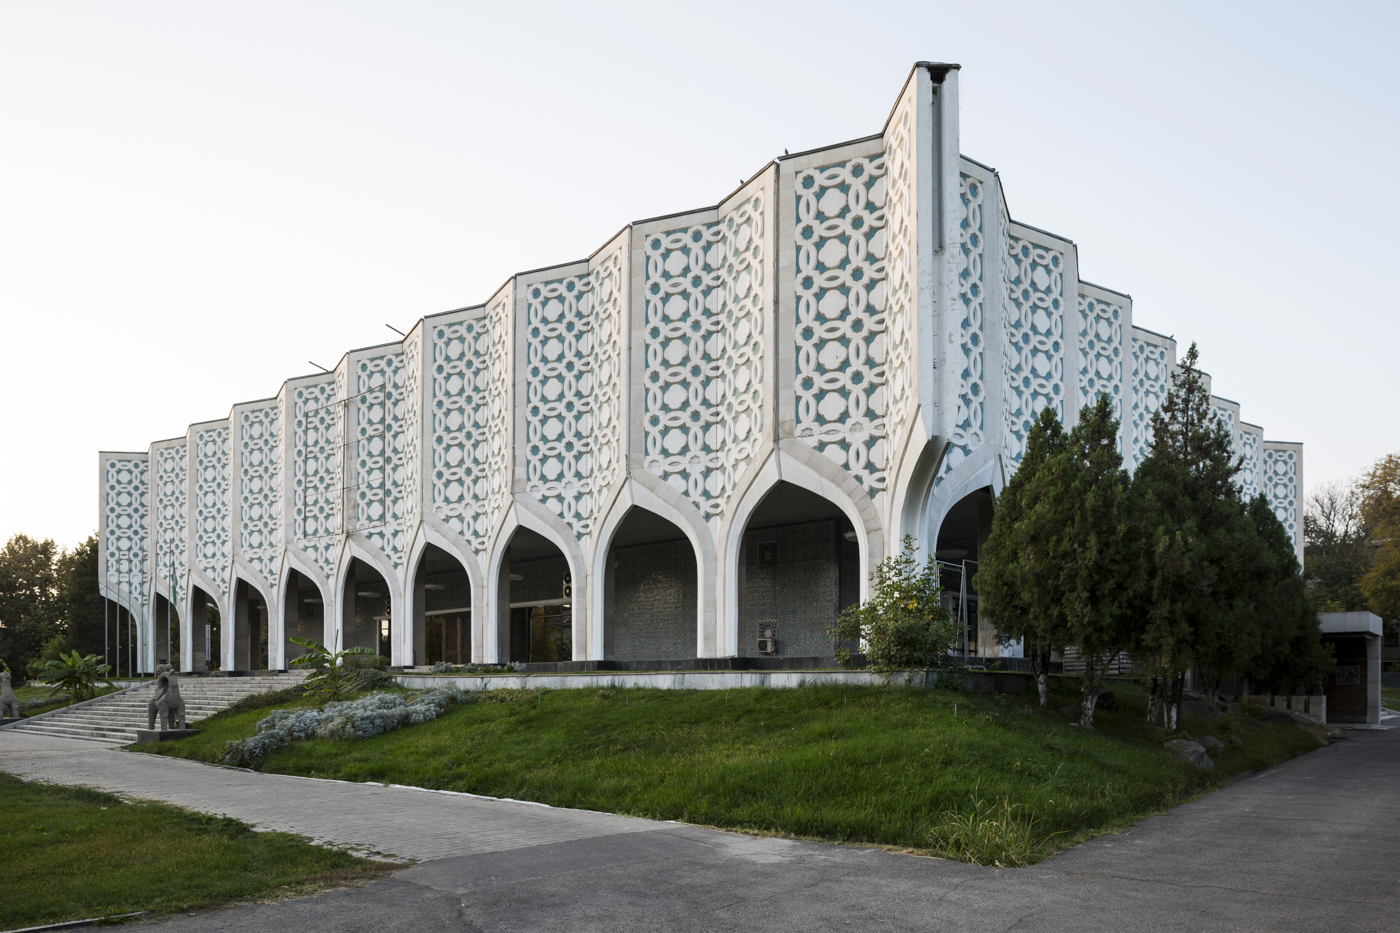 Exhibition Hall of the Uzbek Union of Artists, by R. Khayrutdinov, and F. Tursunov (1974). Tashkent, Uzbekistan. Photo: Stefano Perego